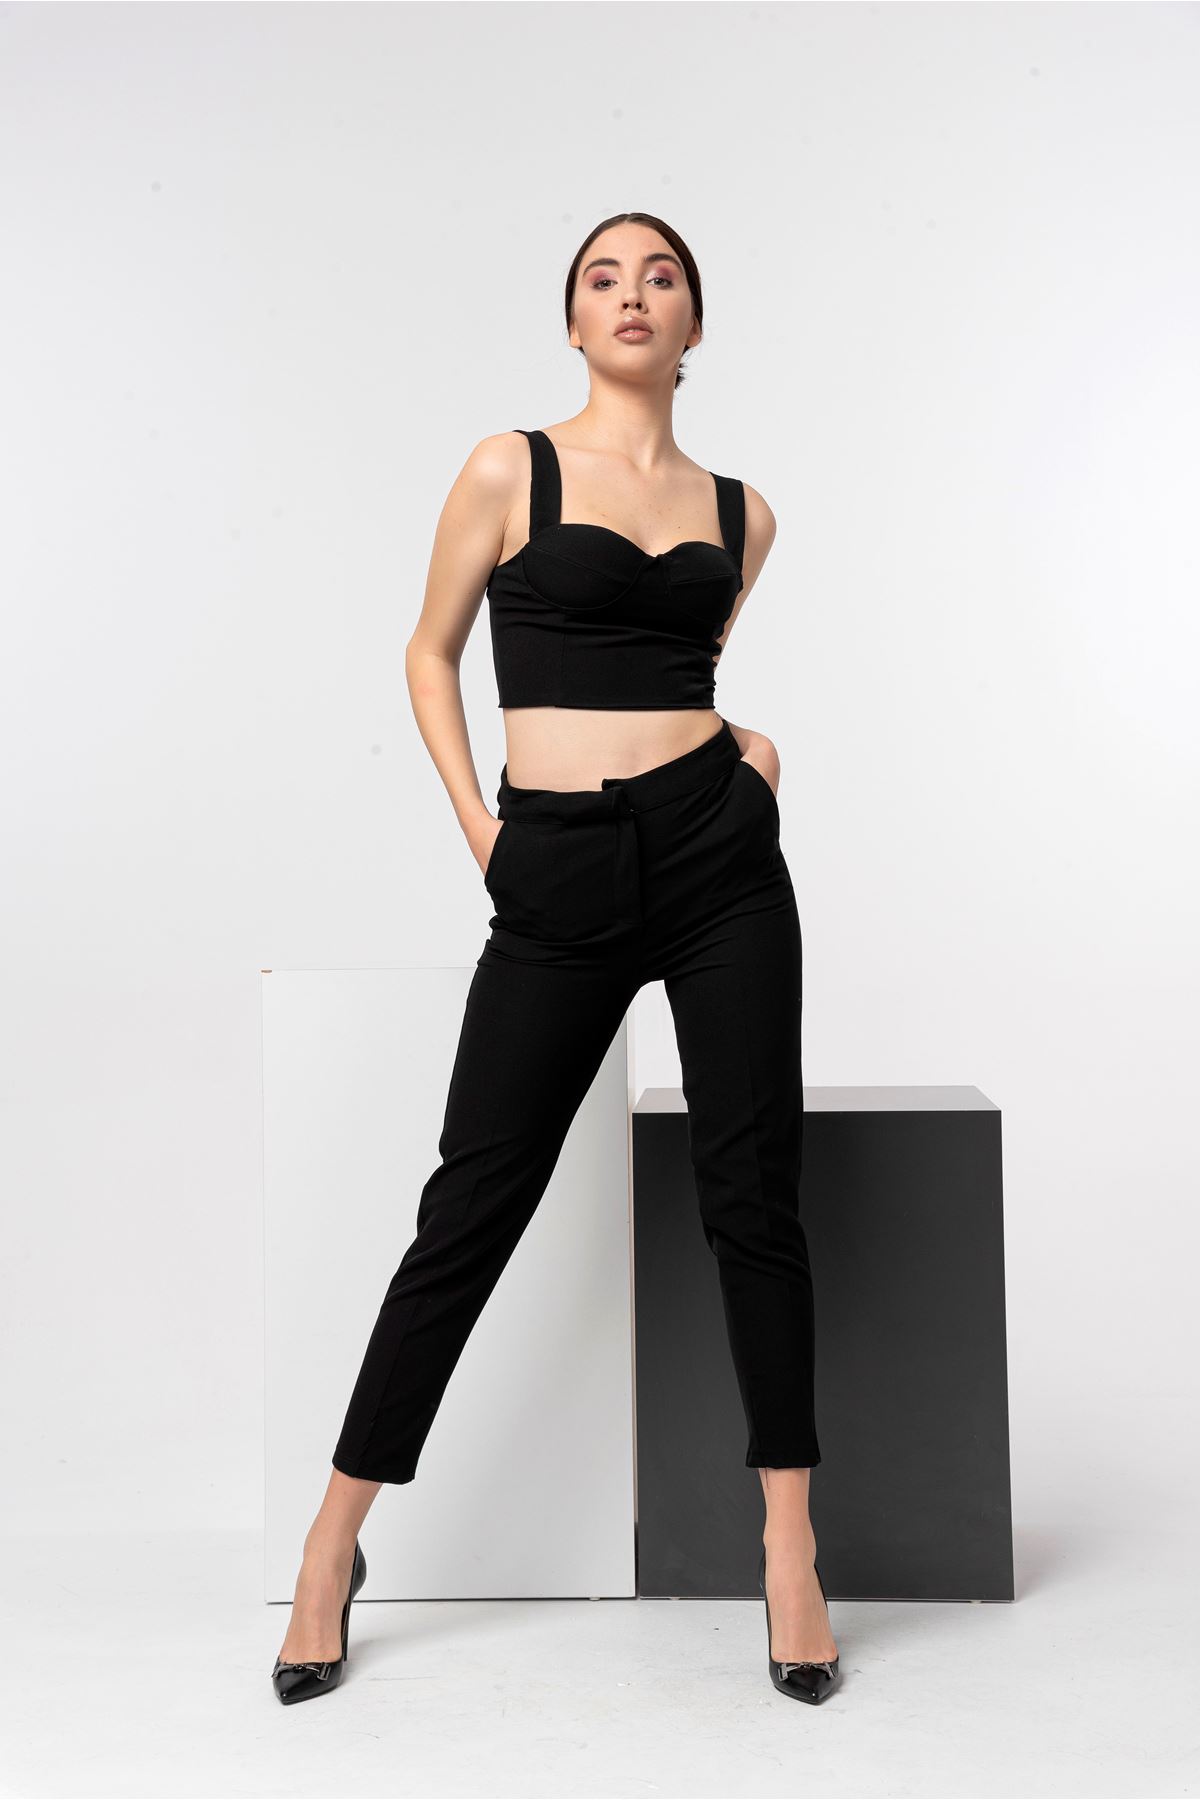 Atlas Fabric Strapless Tight Fit Women Bustier - Black